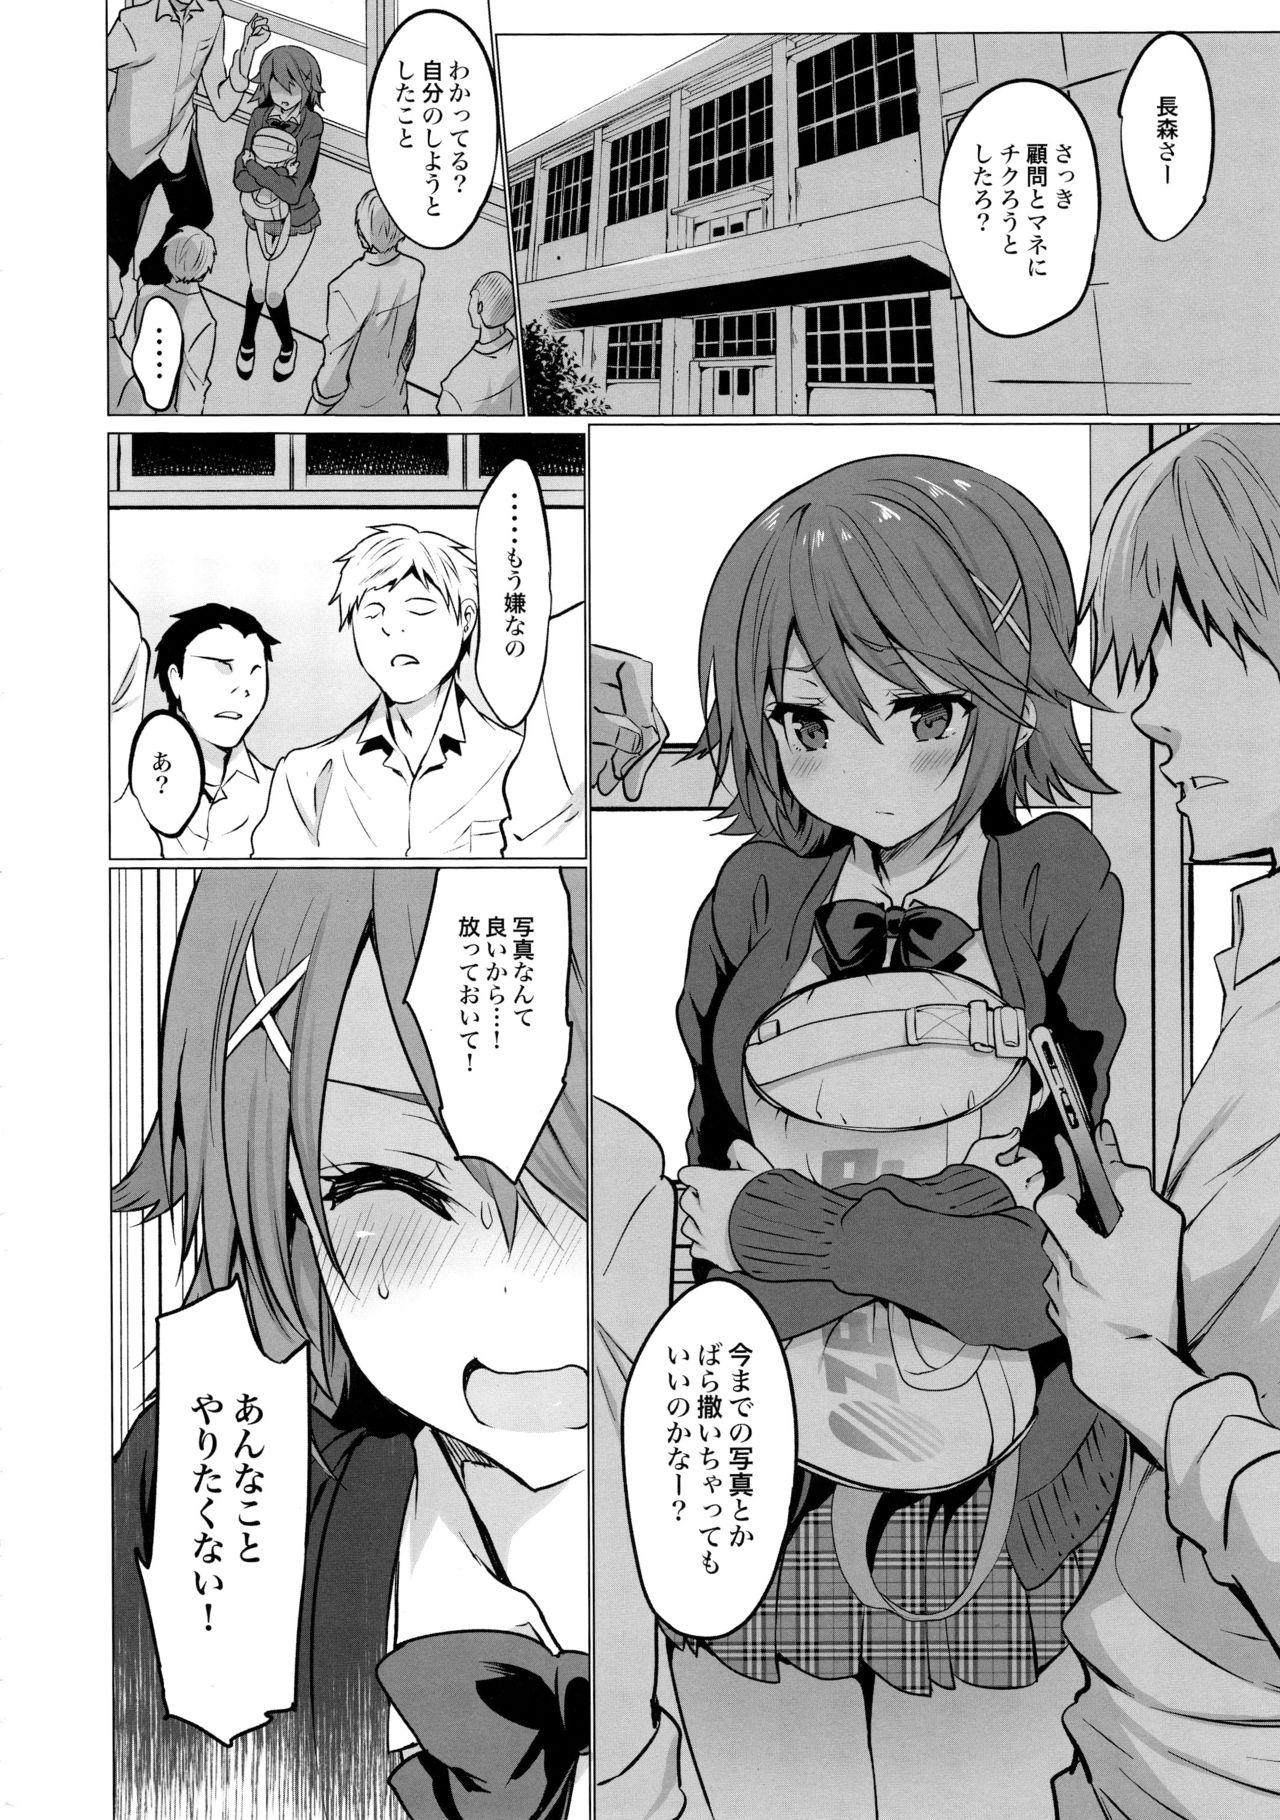 Innocent Gakkou de Seishun! 16 - Original Bailando - Page 6